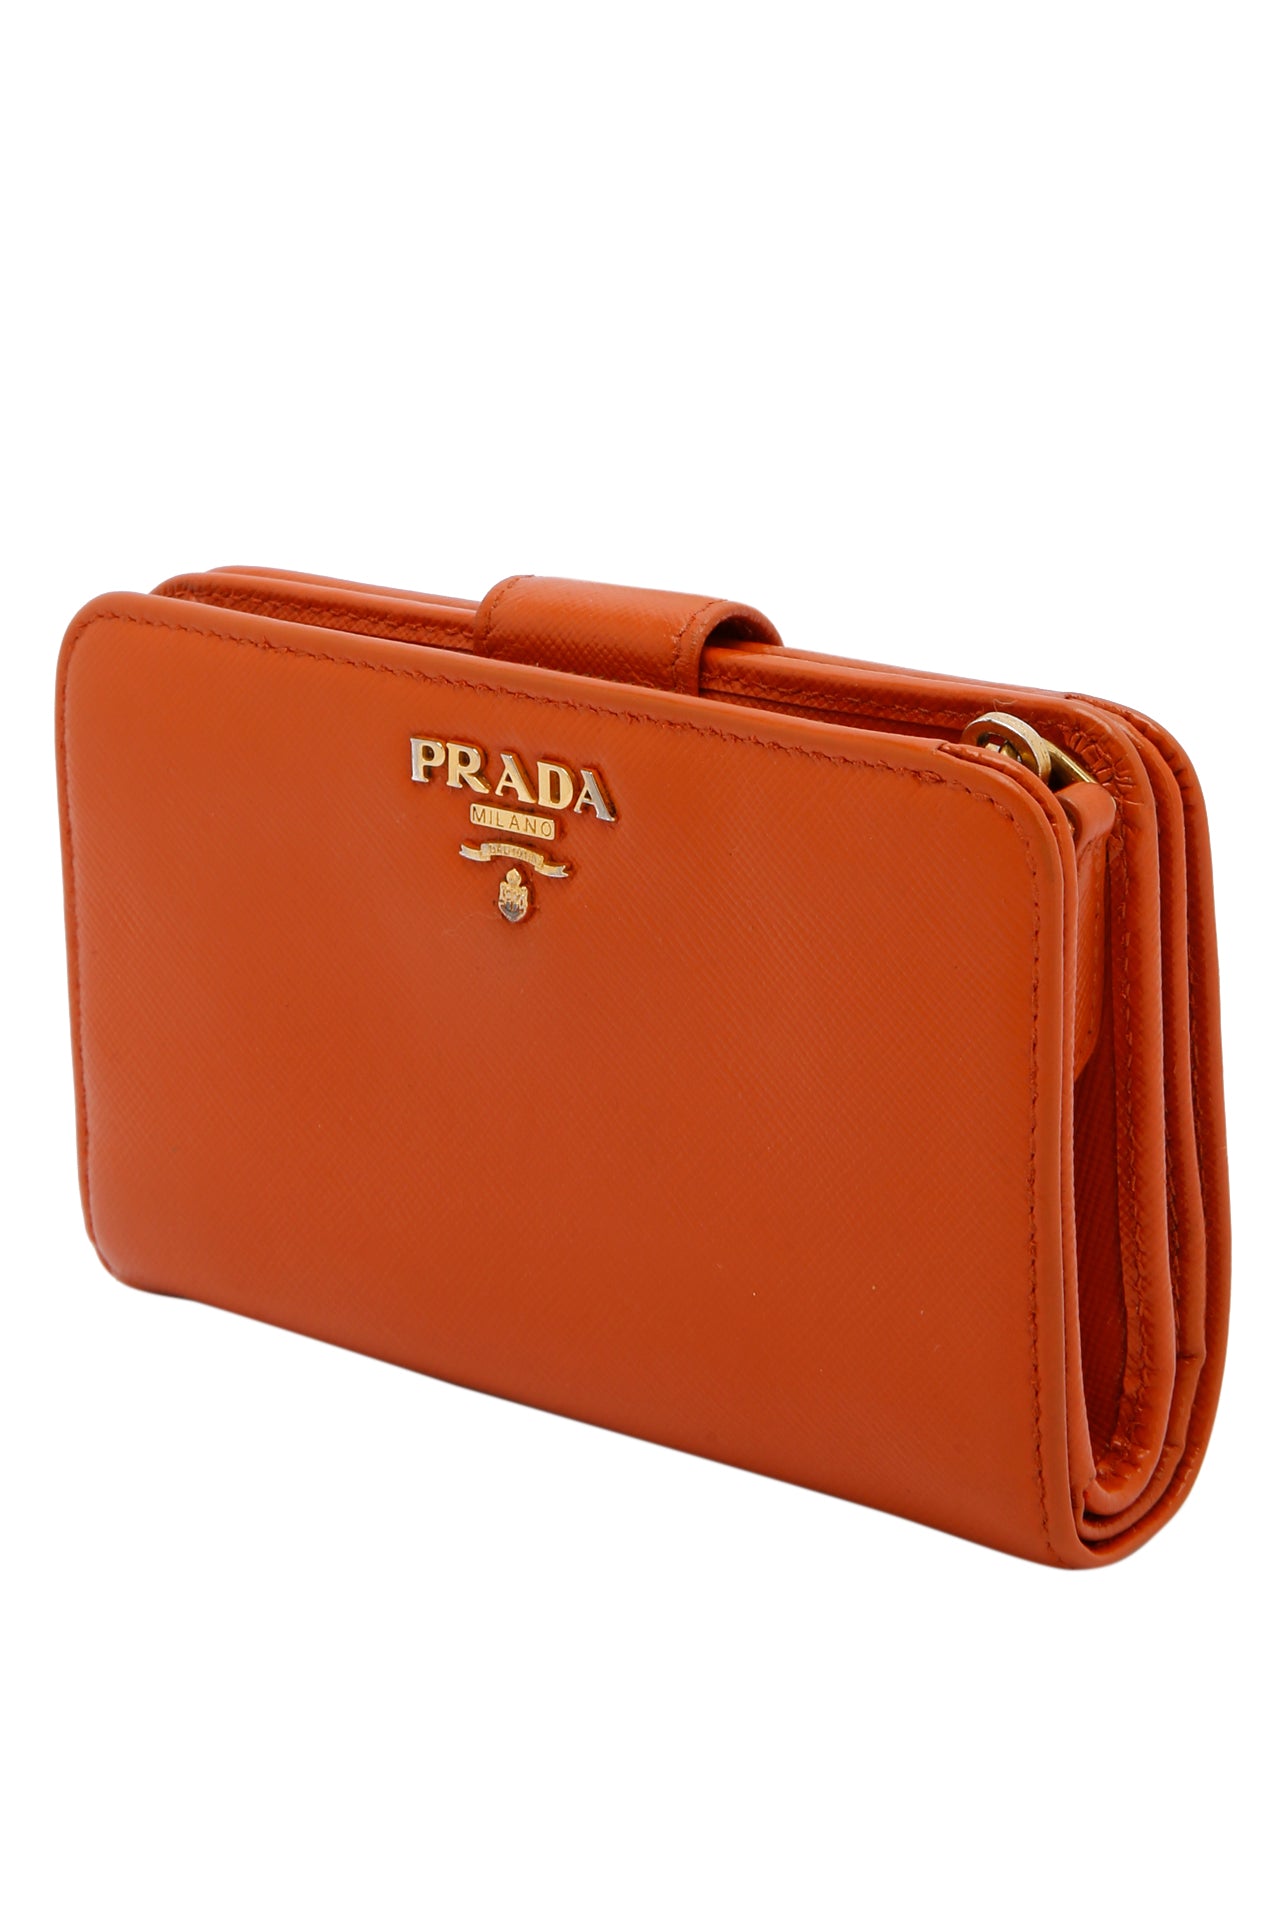 Prada Orange Saffiano Leather Wallet